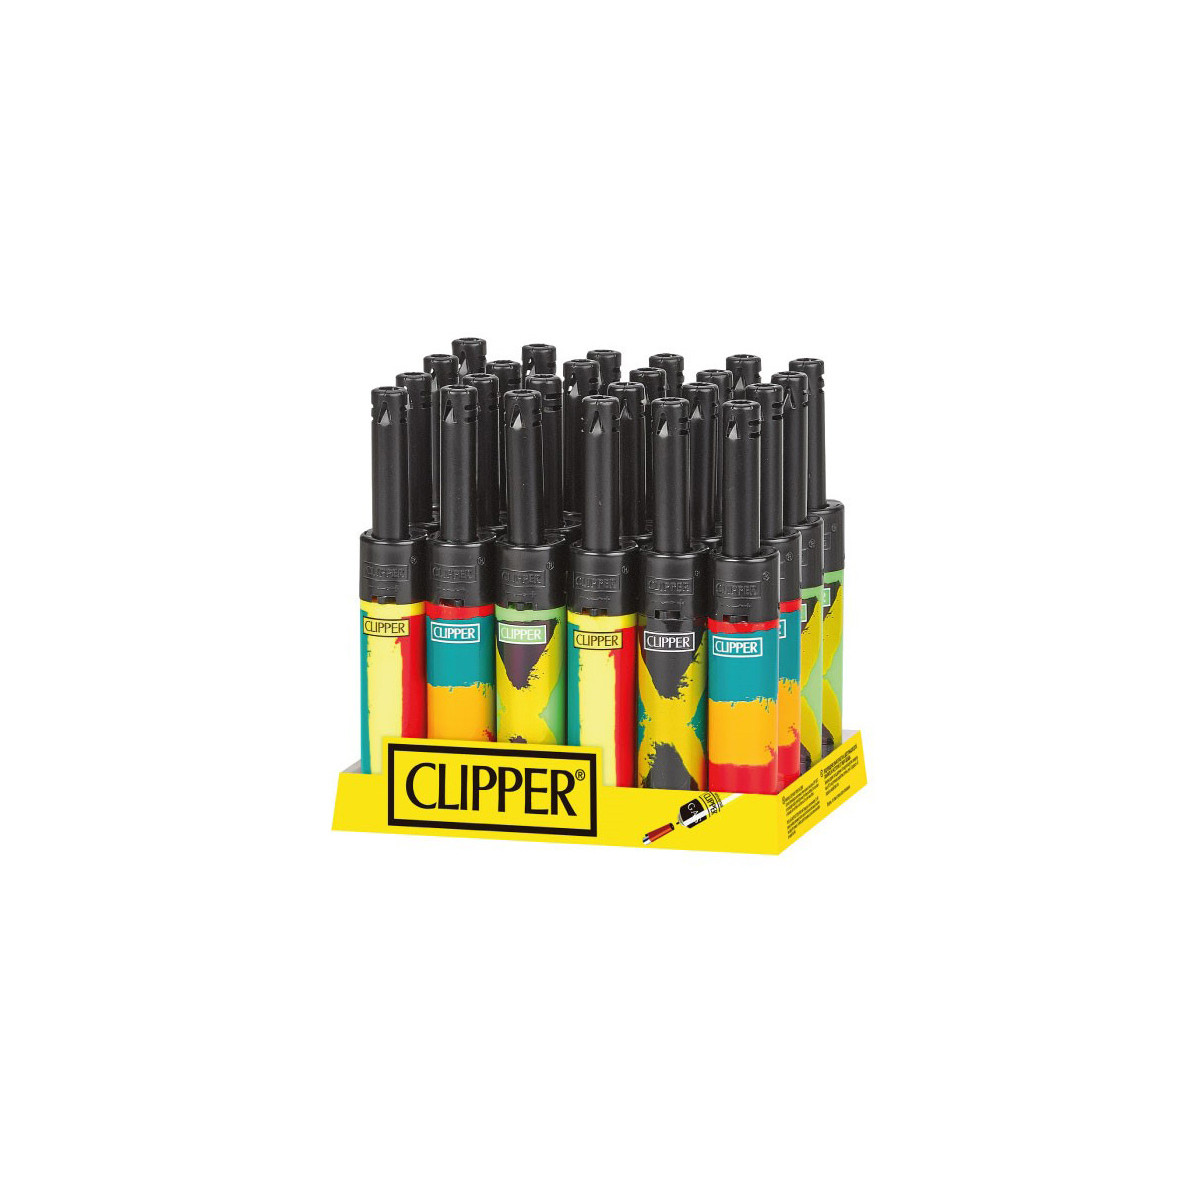 Clipper Mini Lighter Rasta